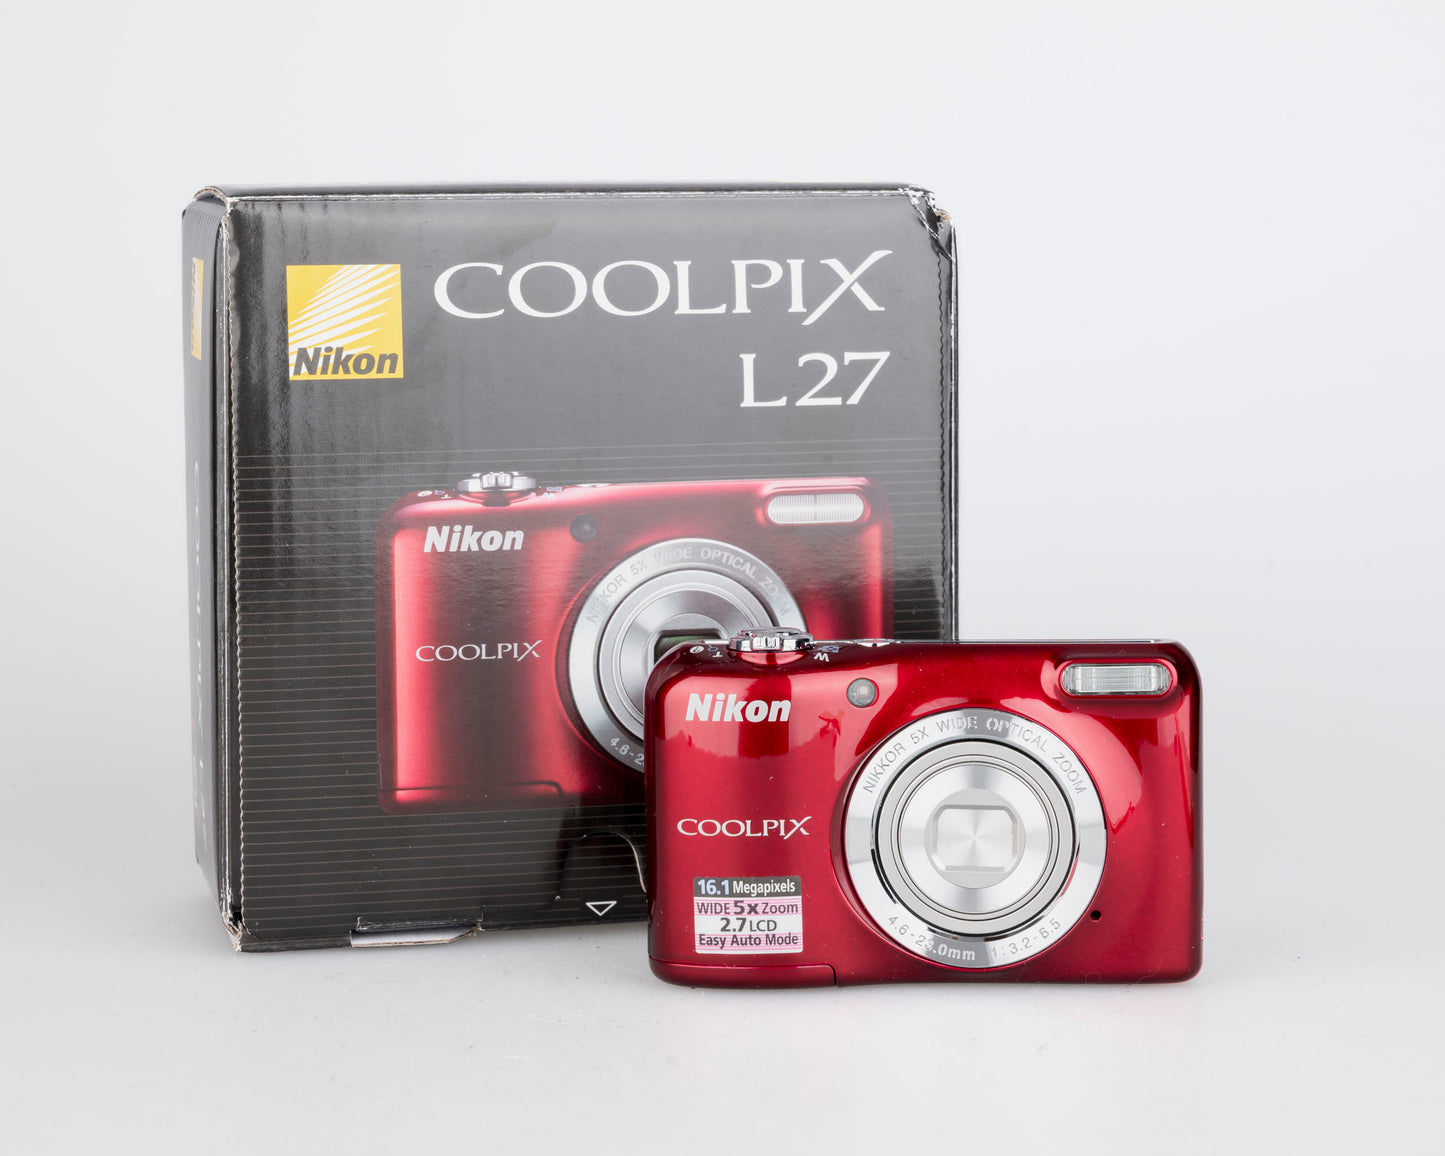 Nikon Coolpix L27 16.1 MP CCD sensor digicam new-old-stock w/ original box + accessories (uses AA batteries + SD card)